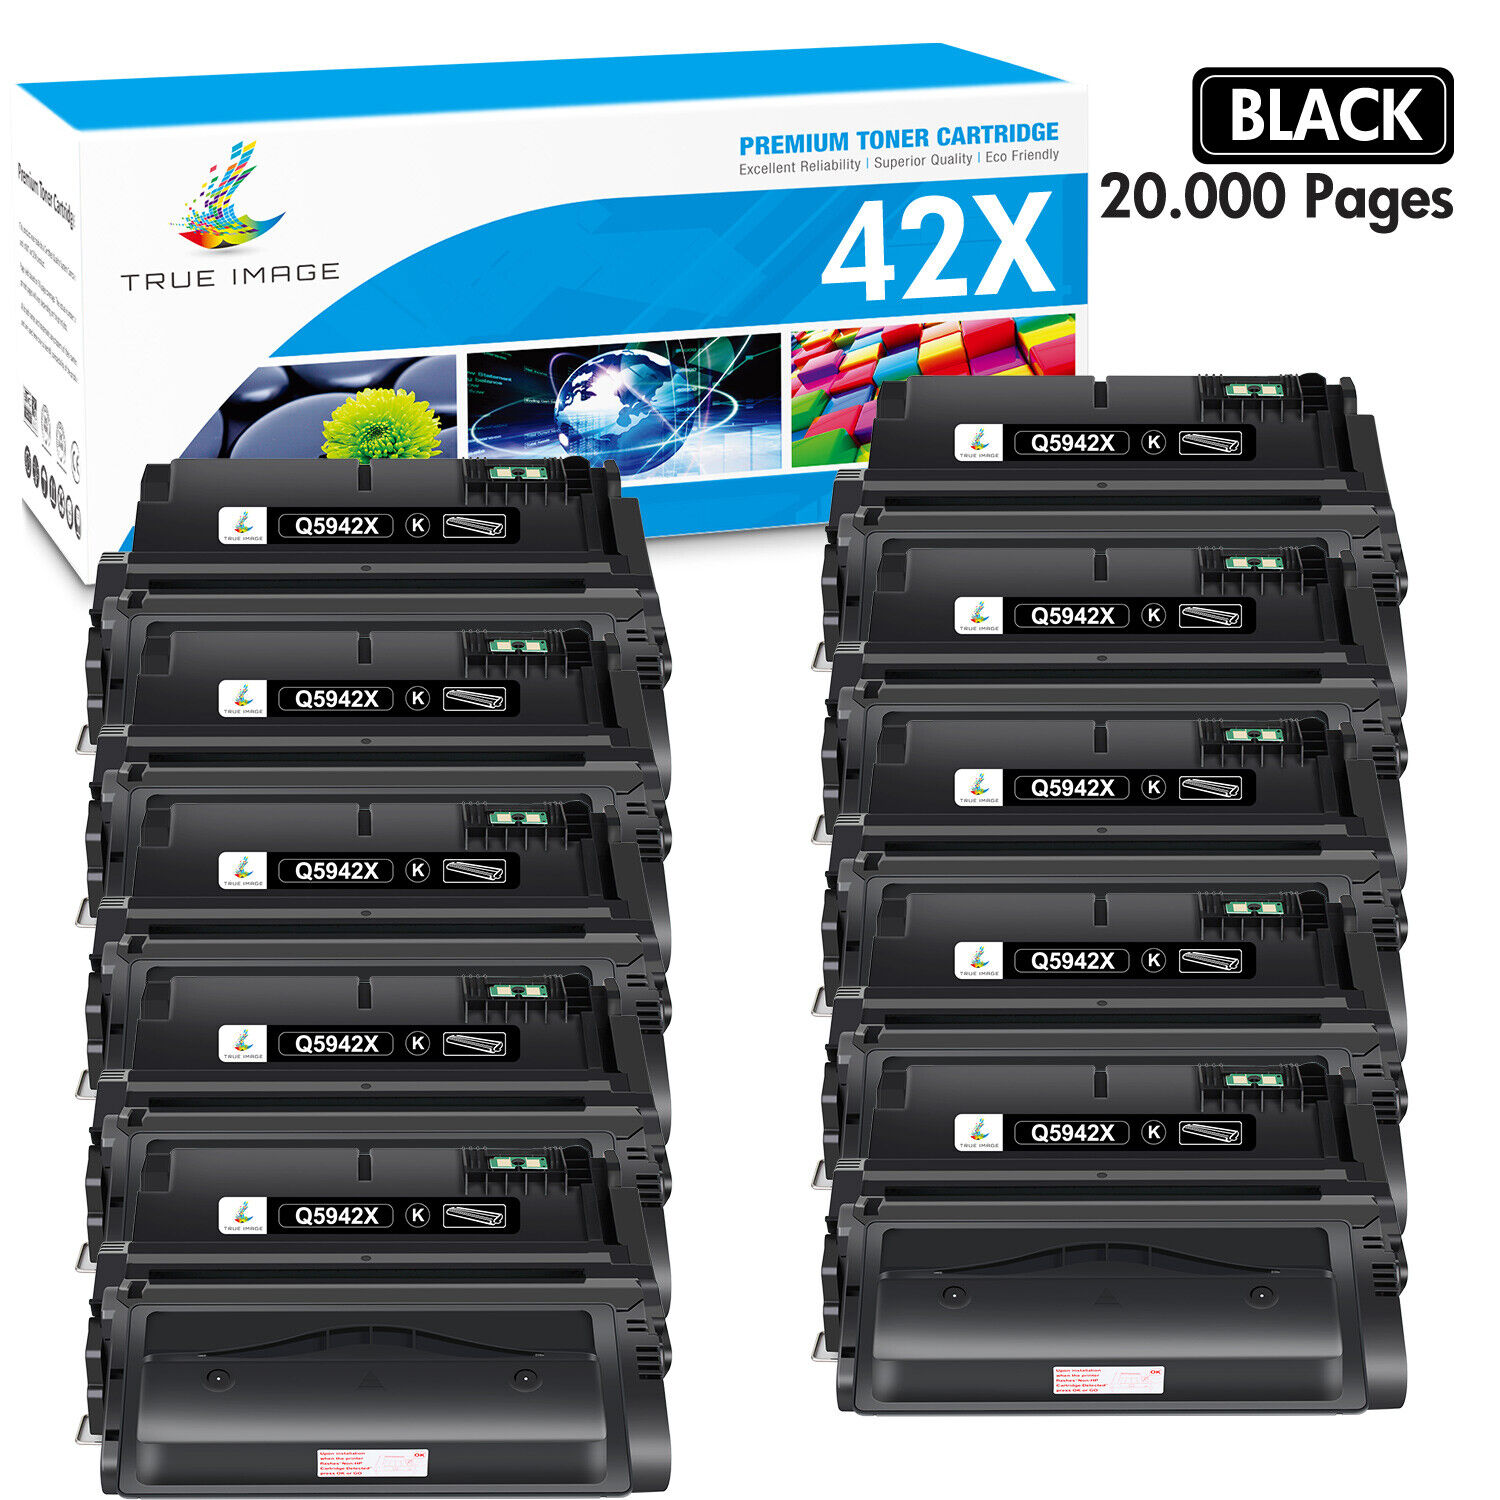 10 Q5942X 42X Toner Compatible with HP LaserJet 4250 4350 4350tn 4200 4240 4250n